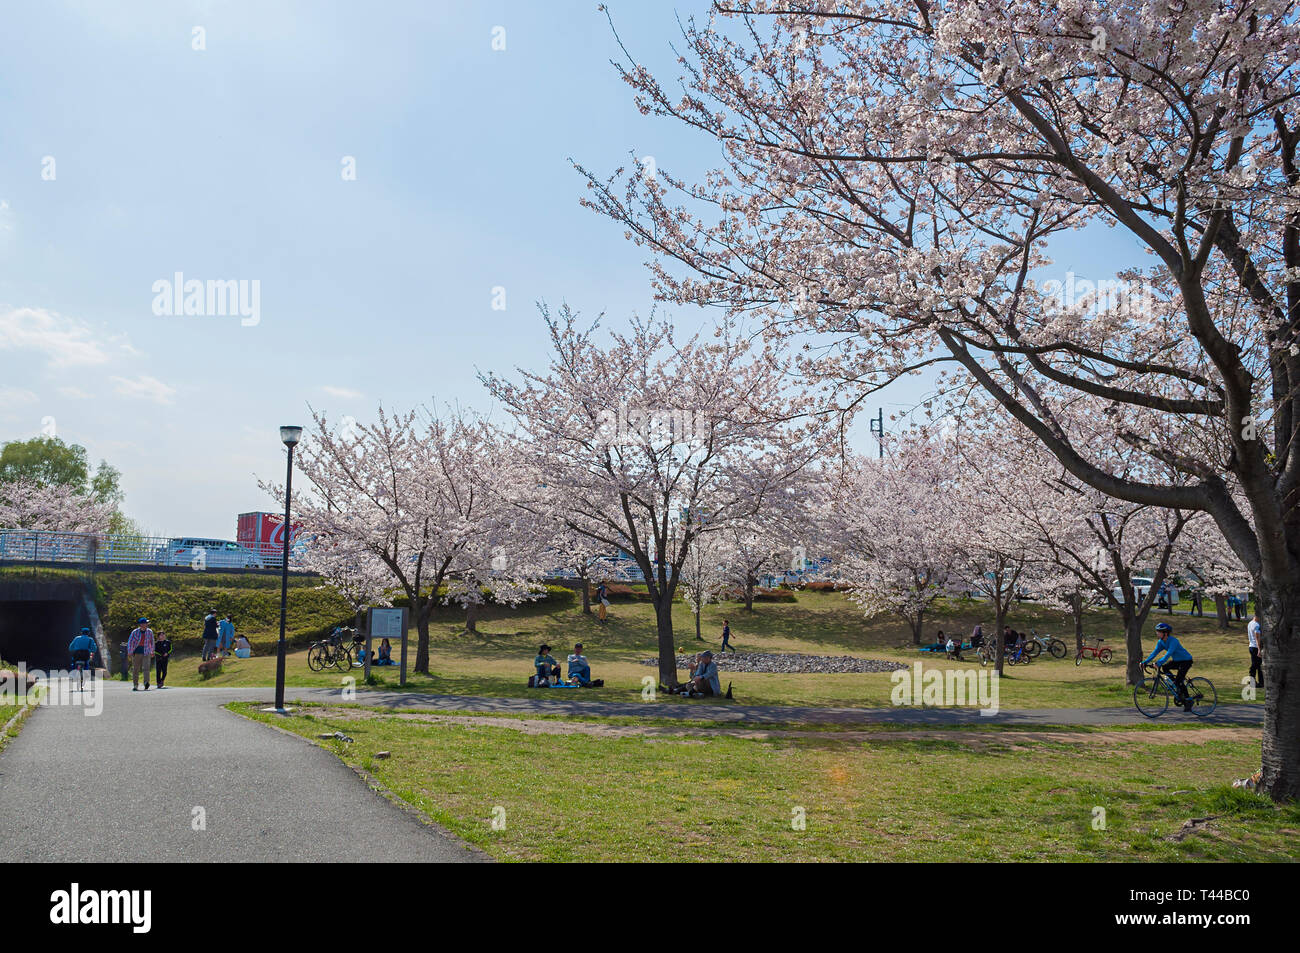 Kashiwa, Chiba, Japan - April 6, 2019: People enjoying the spring cherry blossoms or as known as Hanami in a park at Kashiwa, Japan. Stock Photo